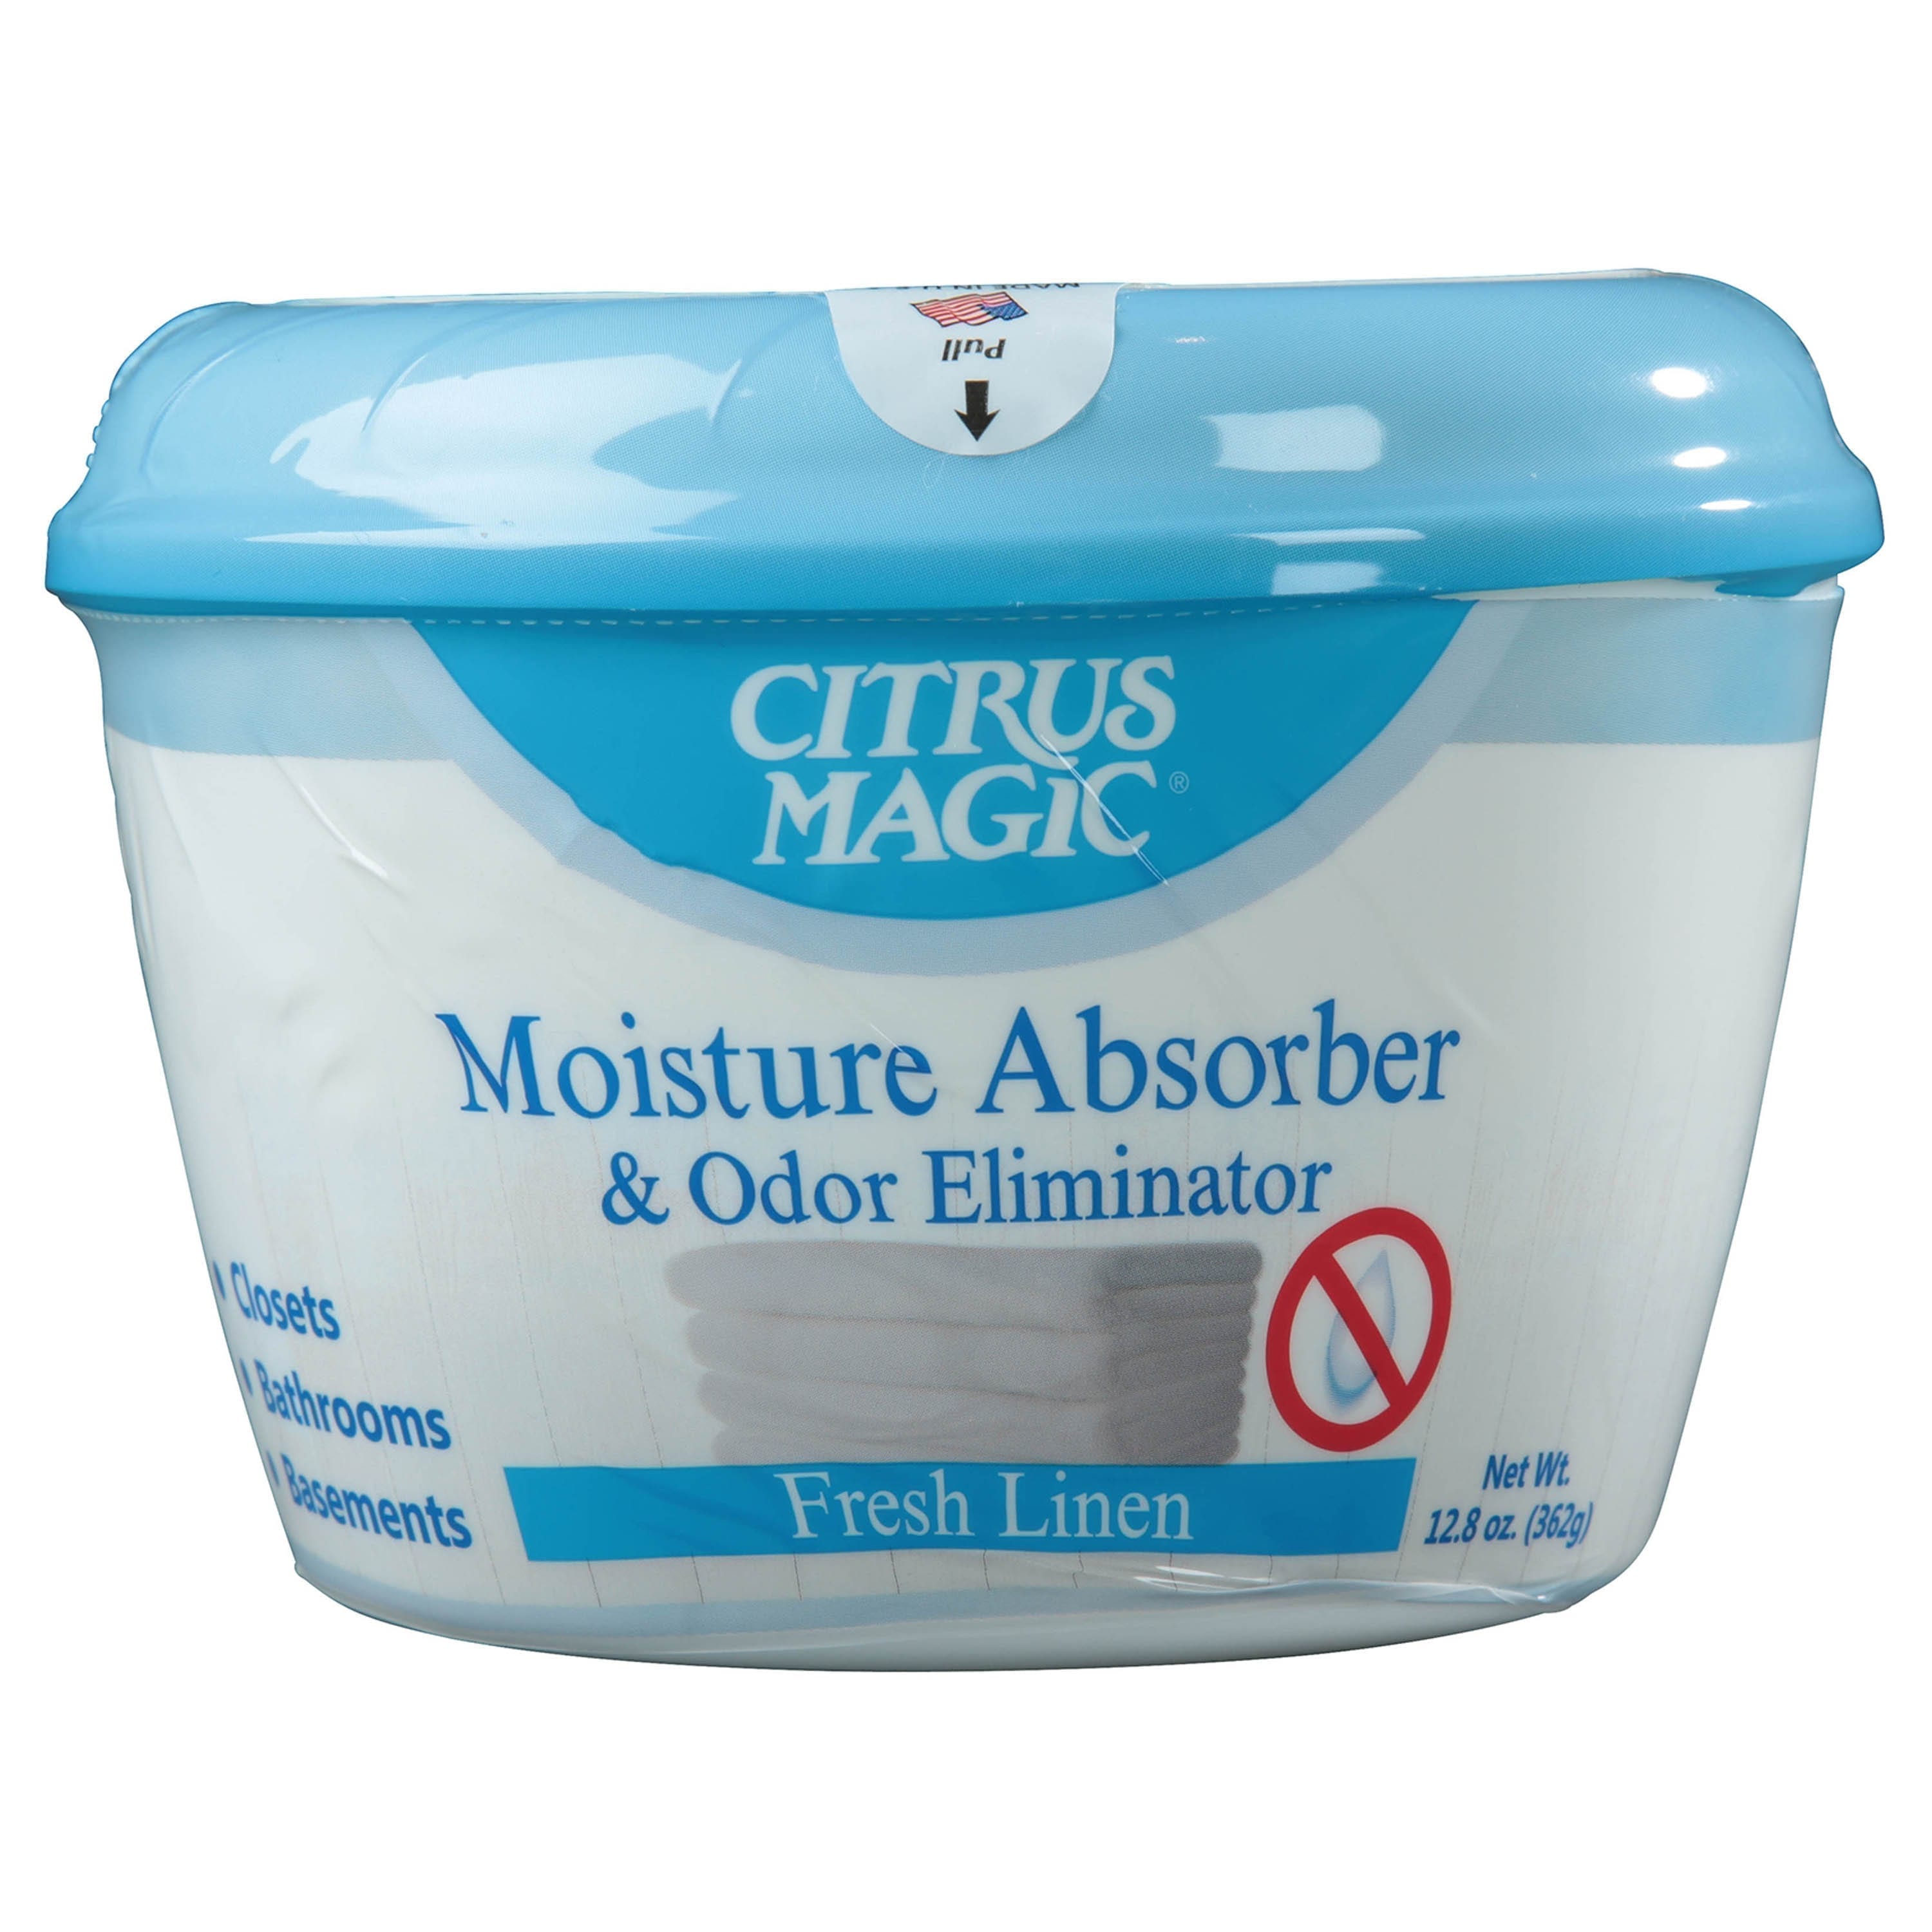 Absorbs Moisture - Citrus Magic Moisture Absorber and Odor